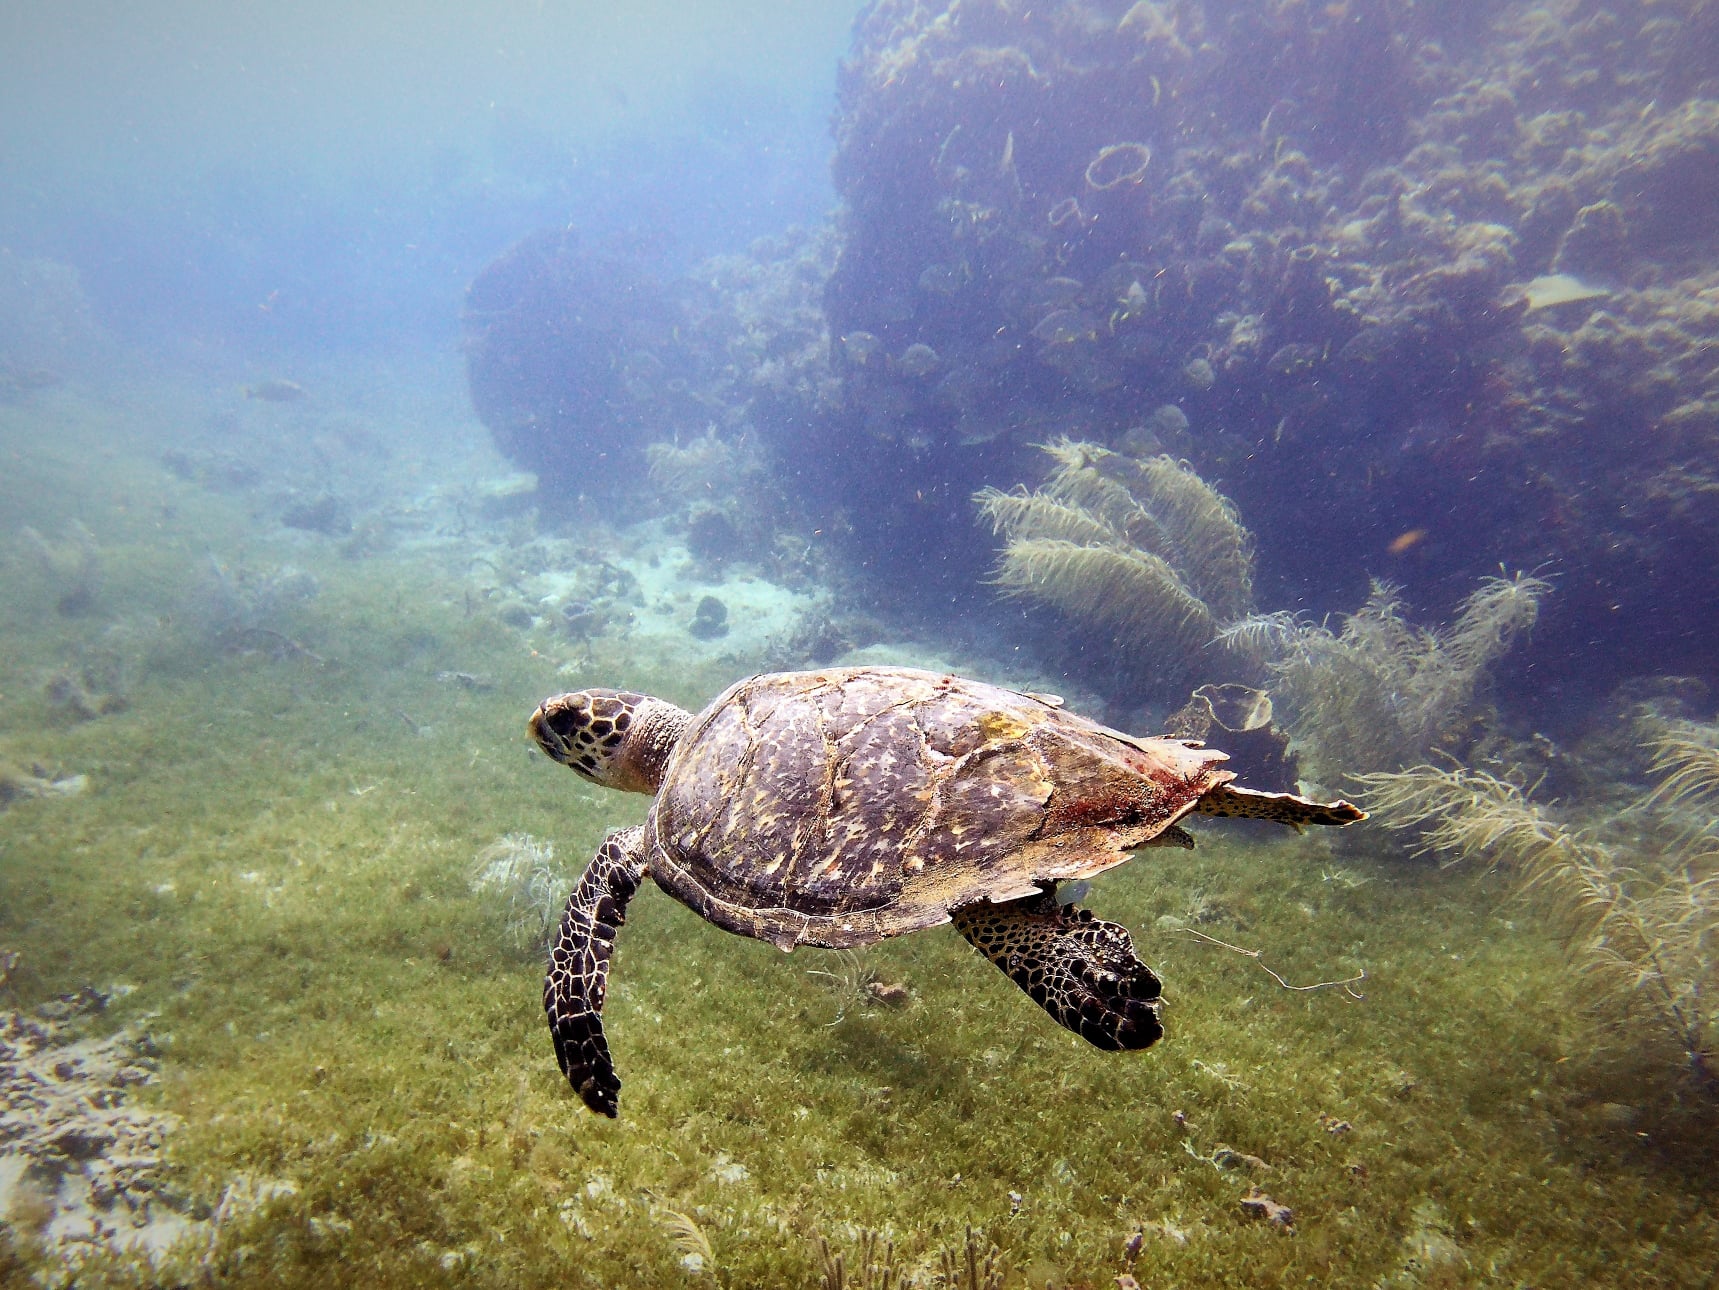 © Réseau tortues marines Guadeloupe